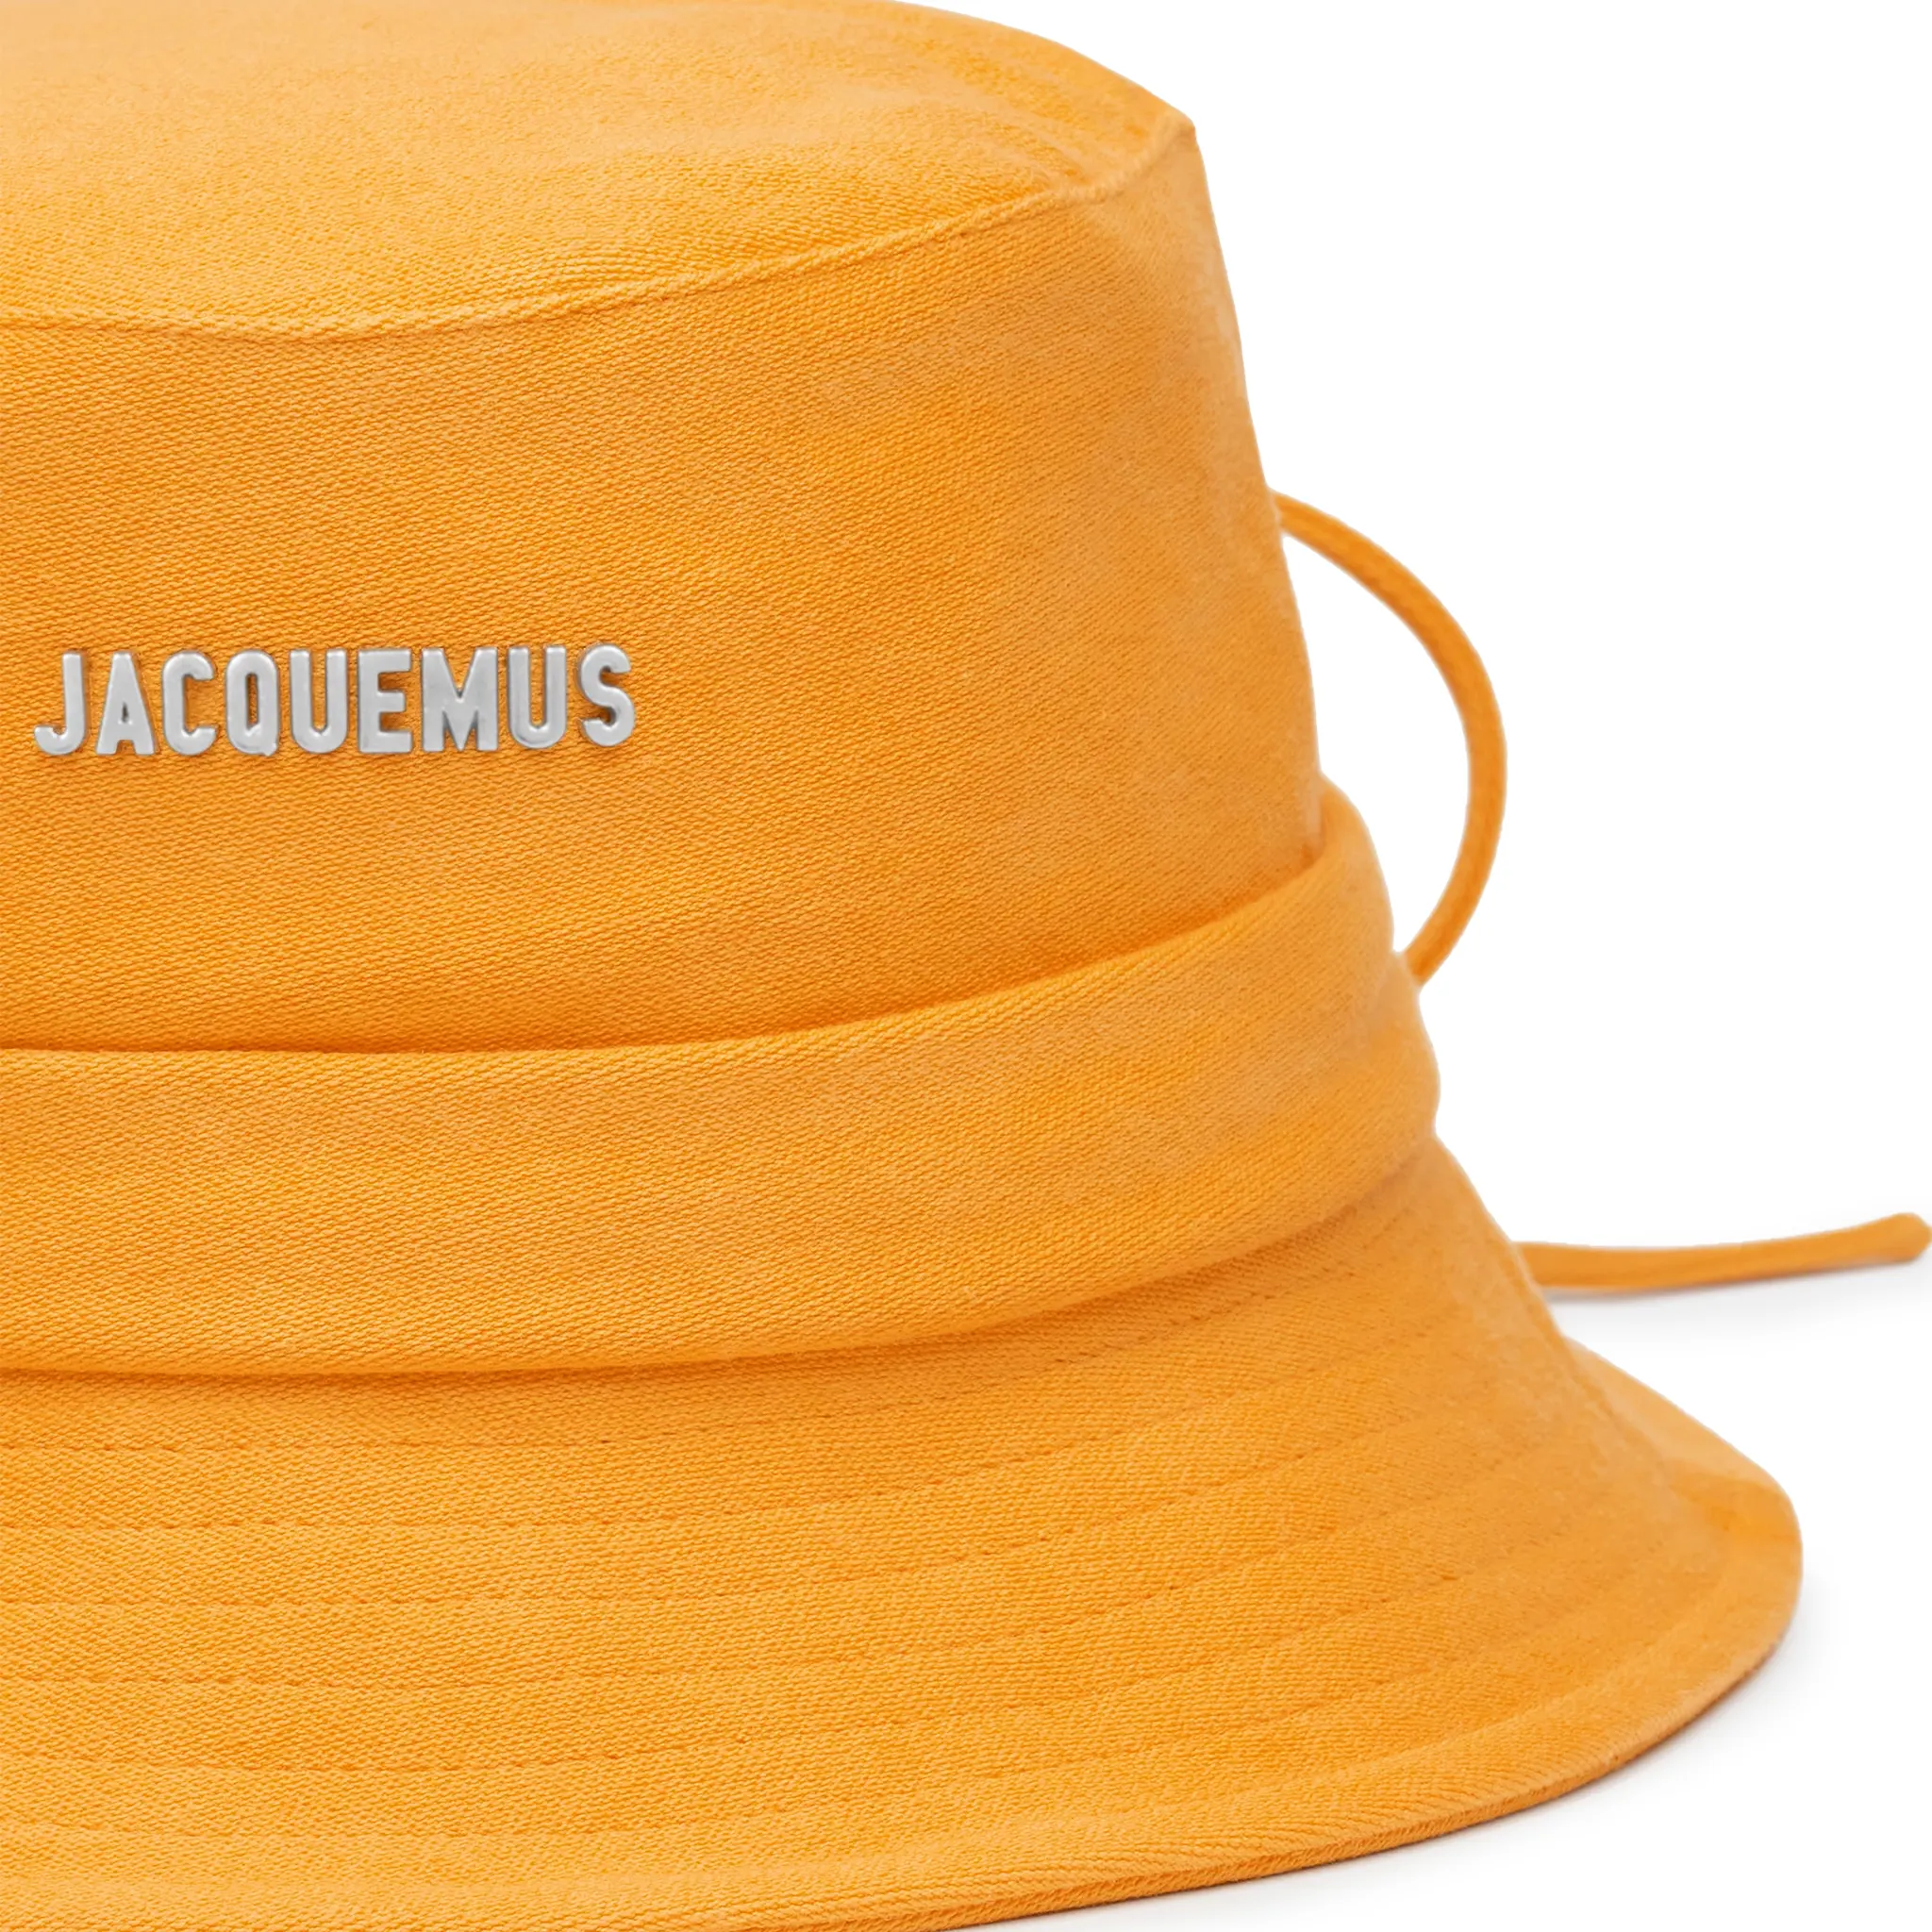 Detail view of Jacquemus Le Bob Gadjo Dark Orange Bucket Hat 223AC001-5106-780